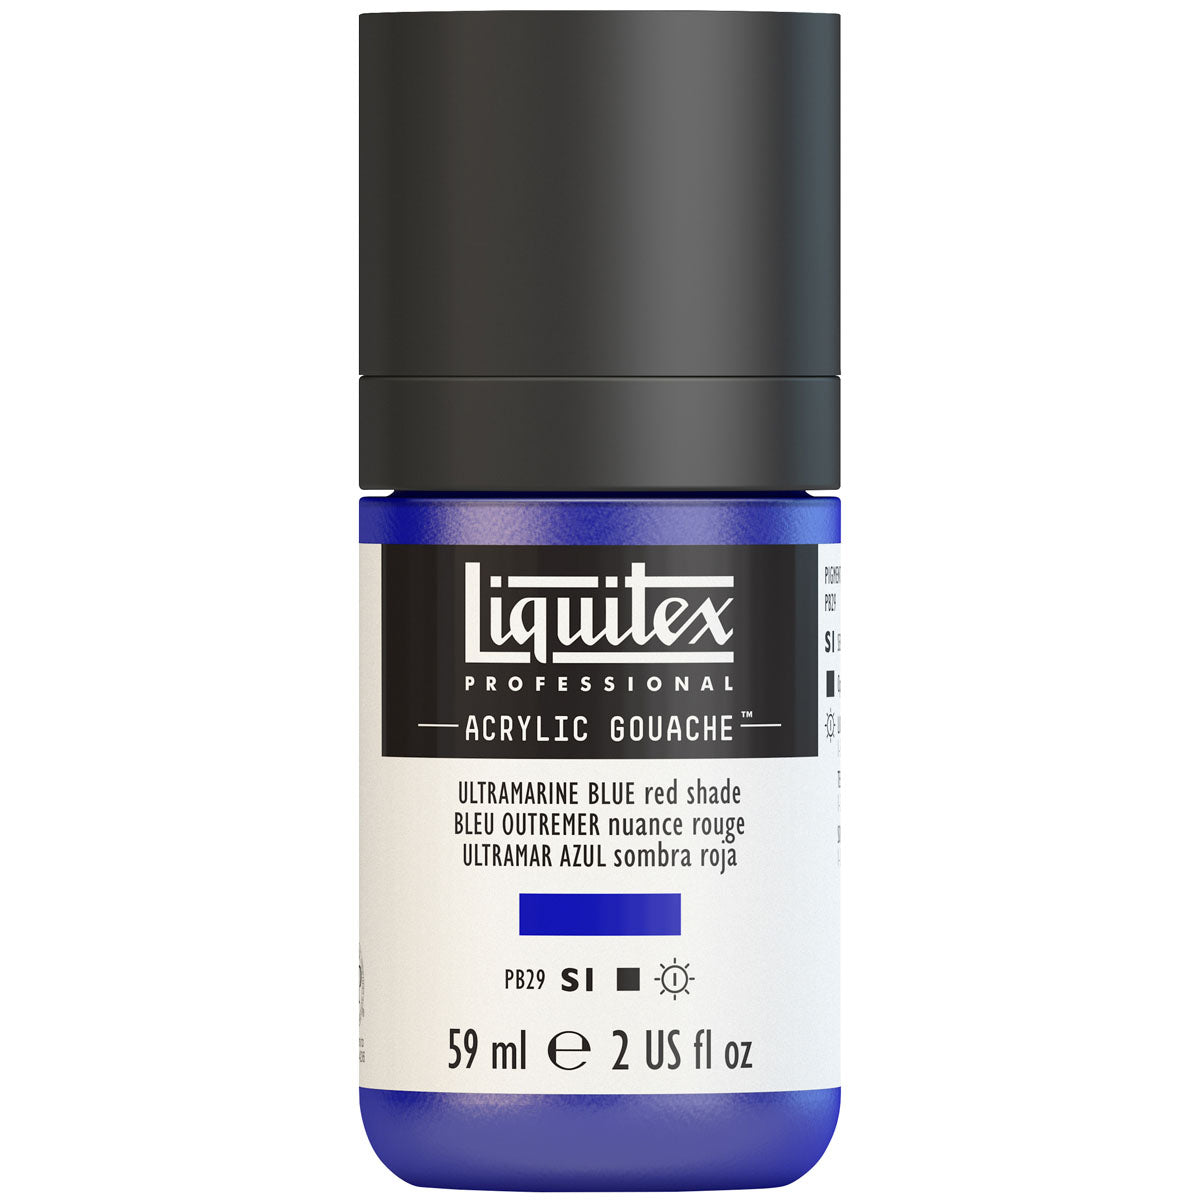 Liquitex - Acrylic Gouache 59ml S1 - Ultramarine Blue Red Shade